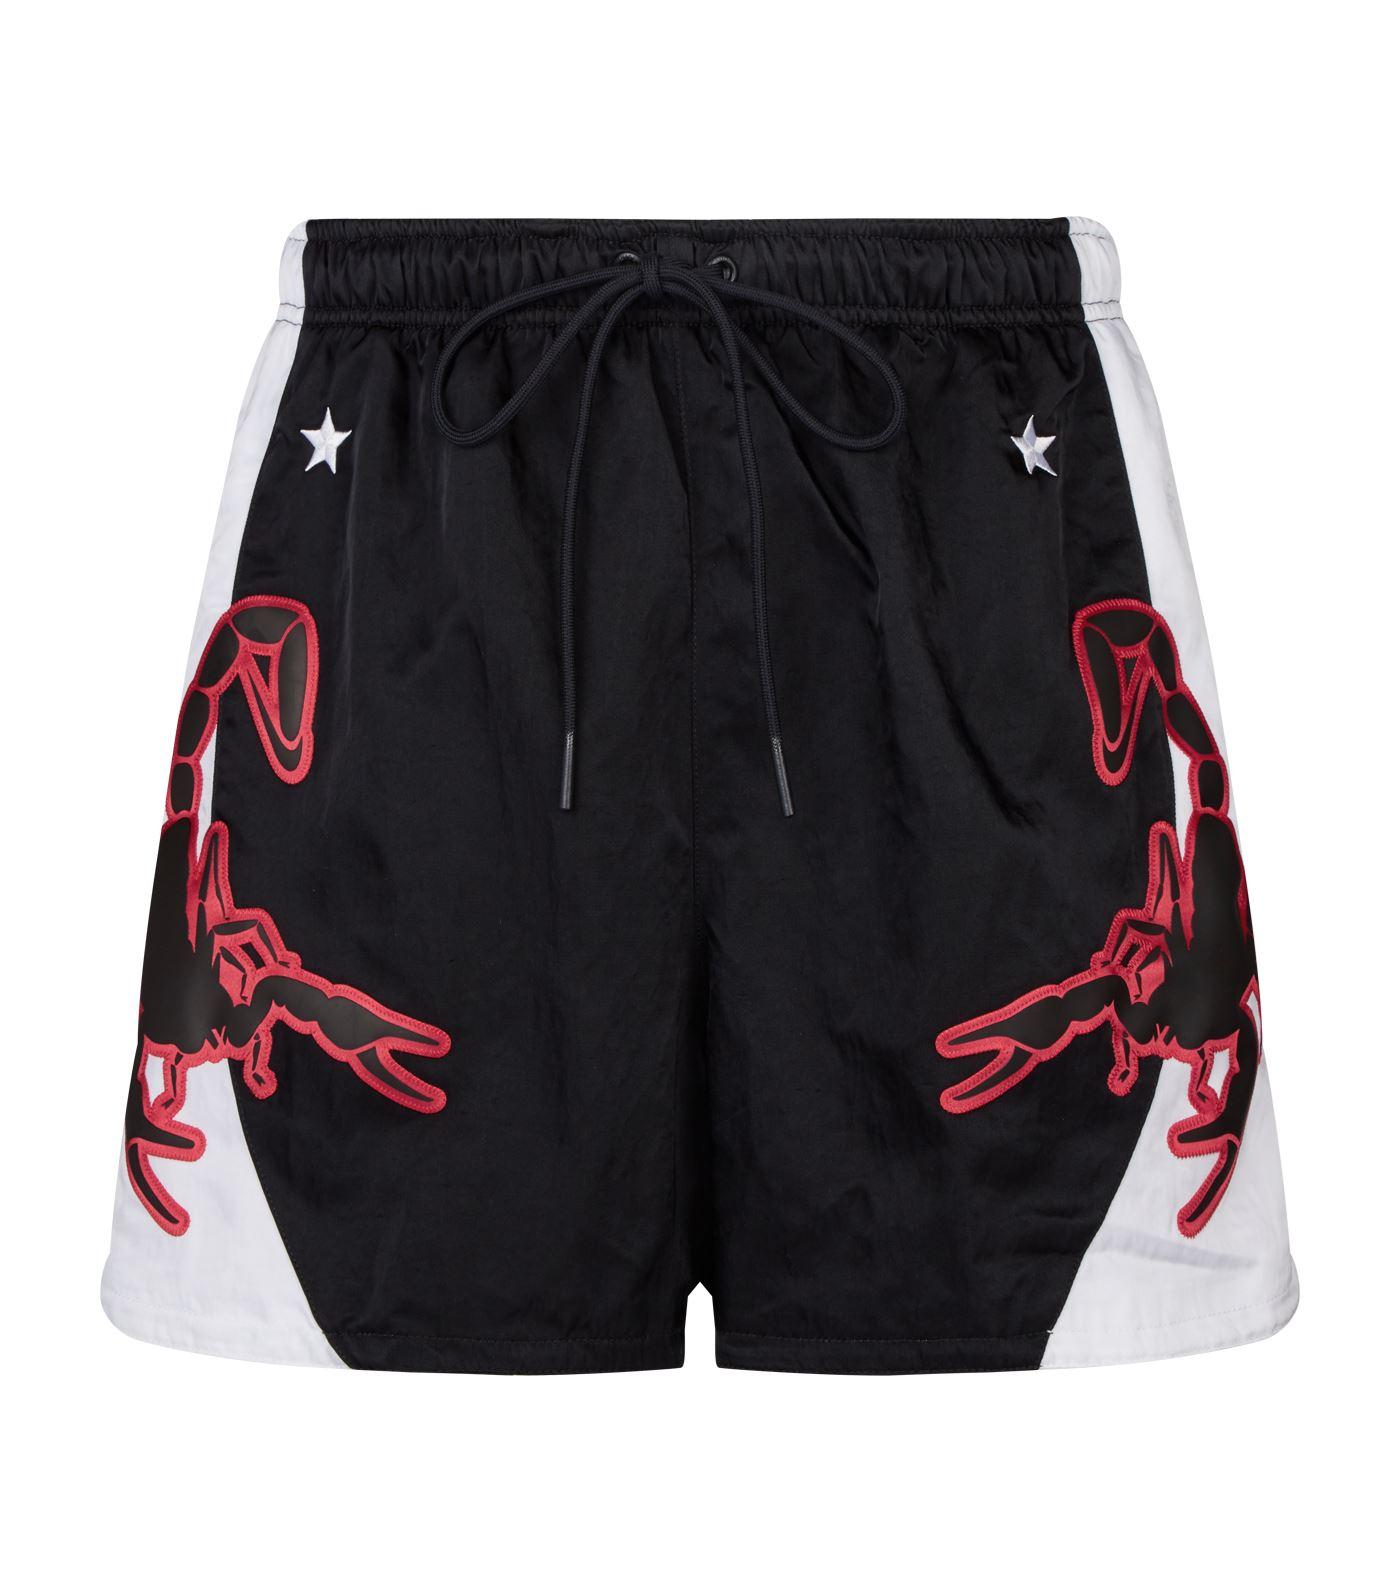 Nike Scorpion Shorts in Black for Men - Lyst